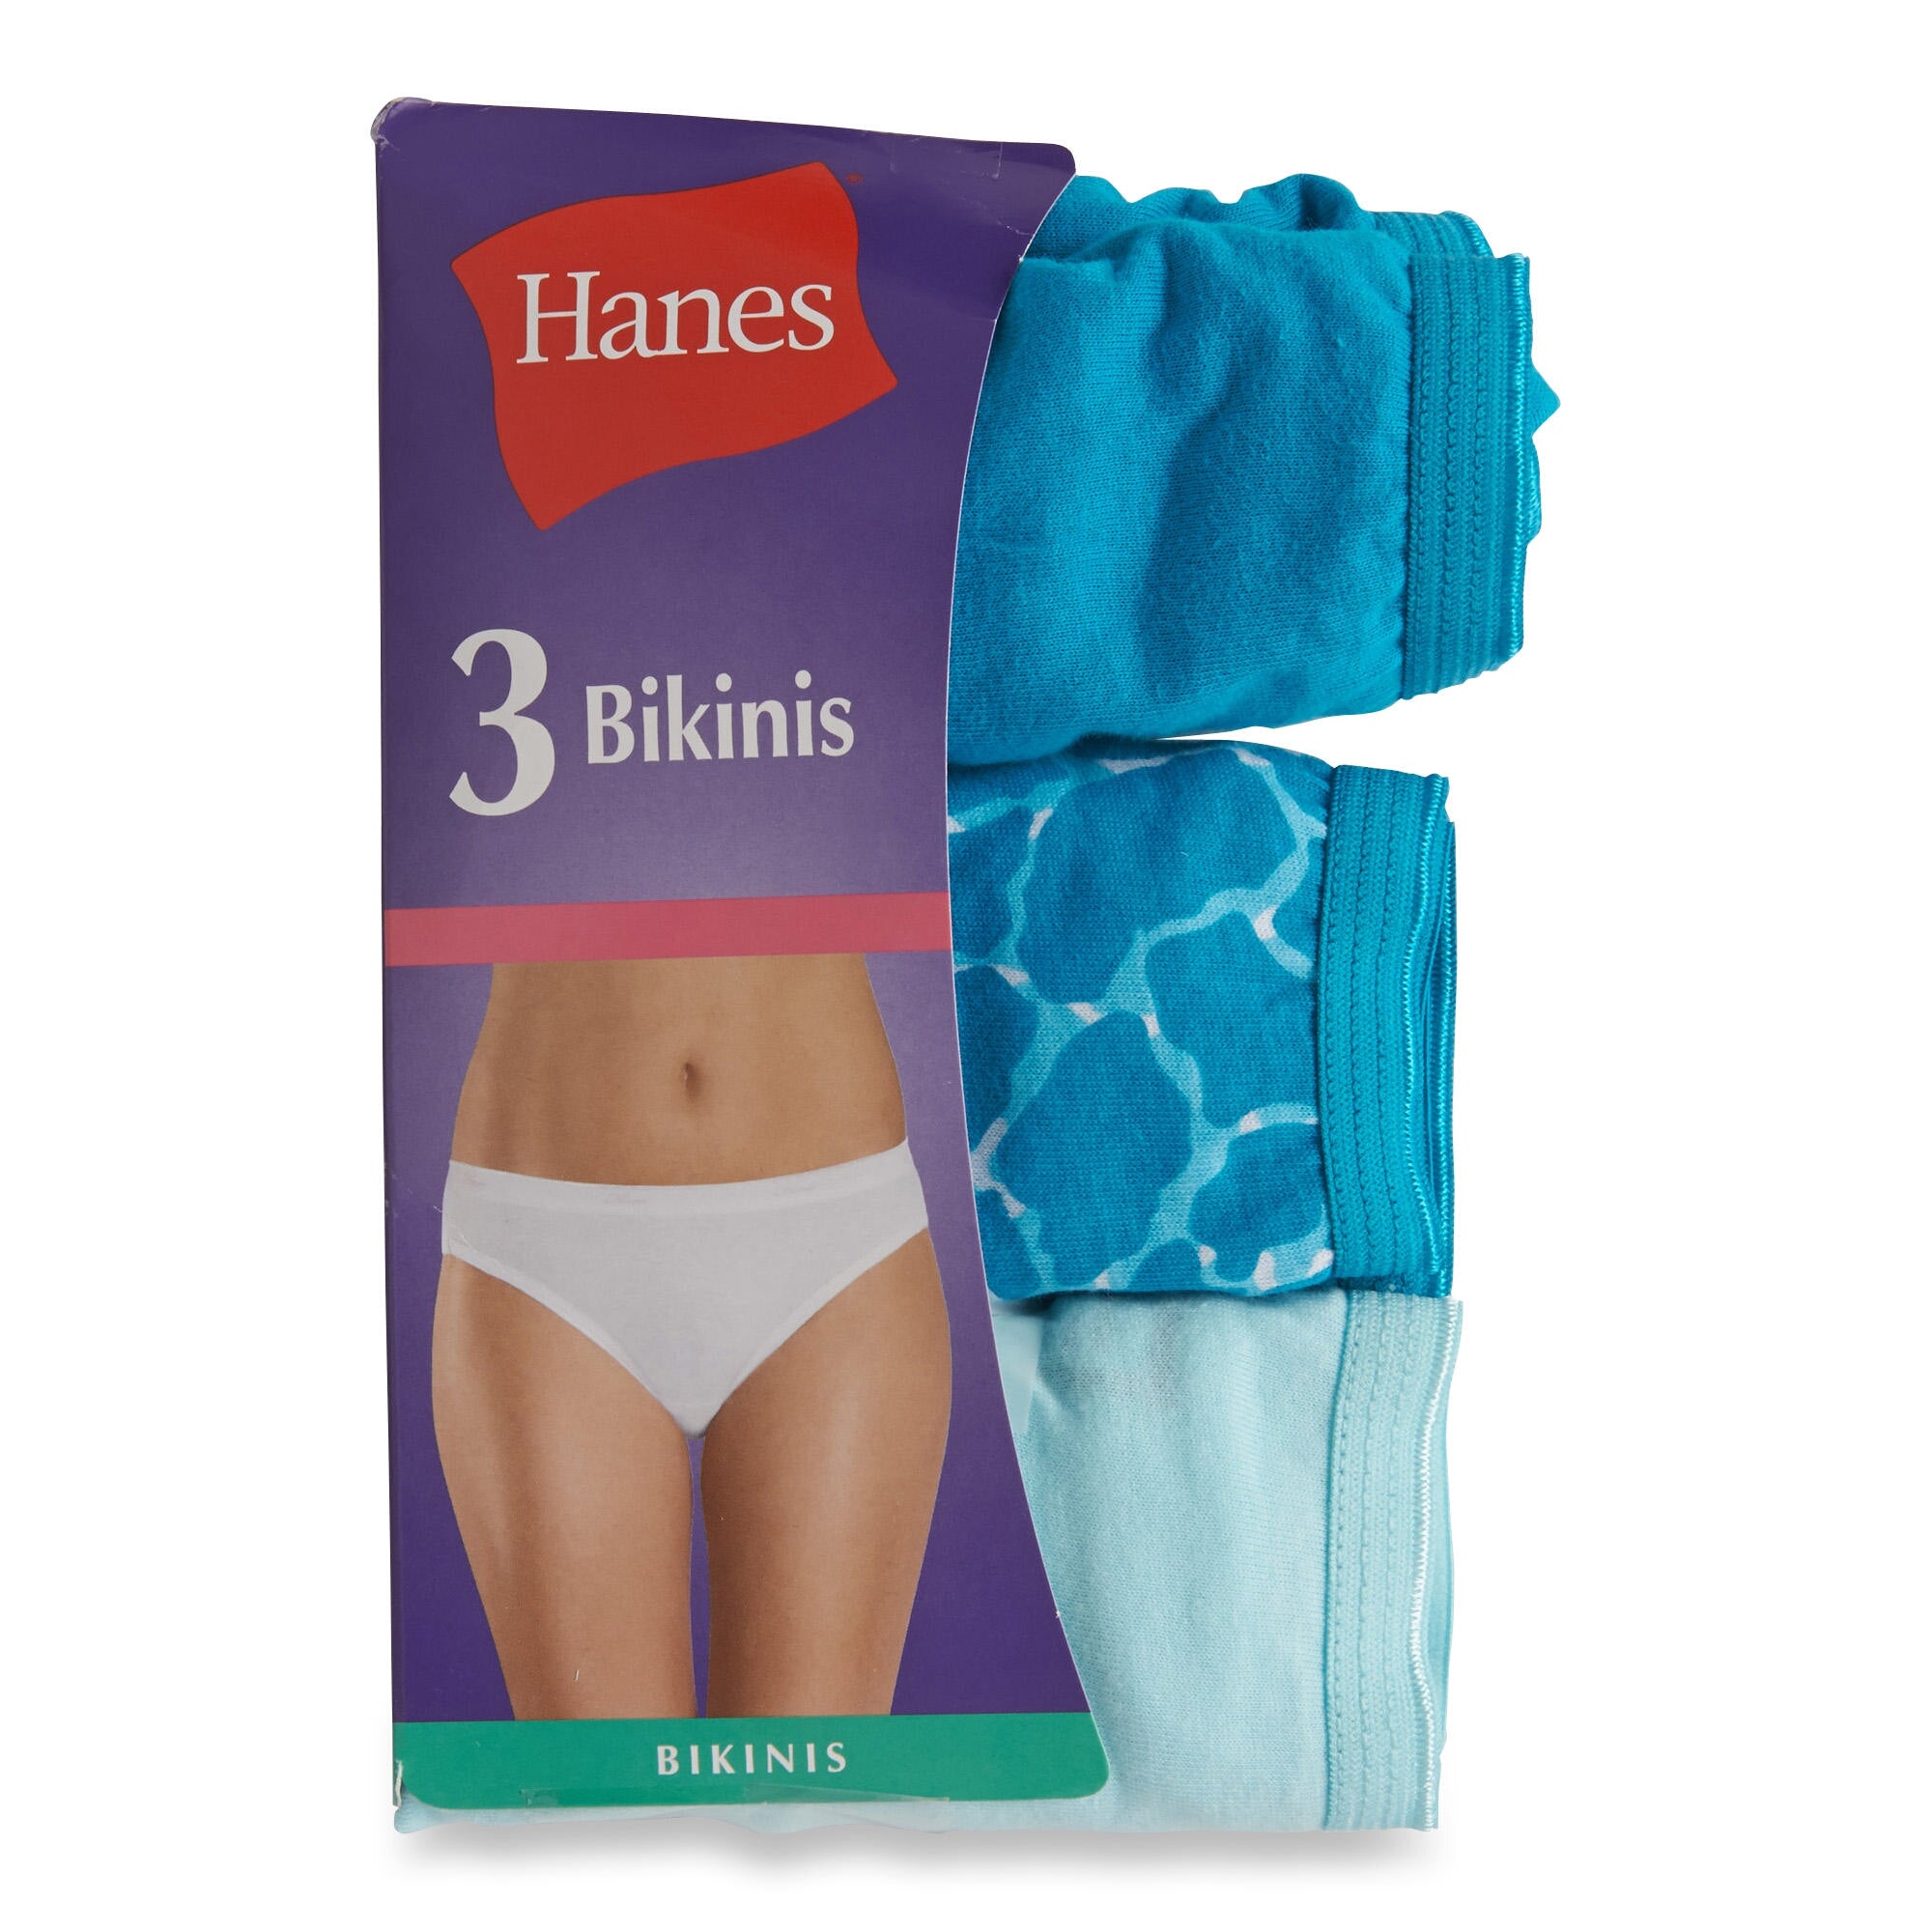 Hanes Women's Soft Stretch Lace Bikini Underwear, 2-Pack, Anthracite –  Giant Tiger